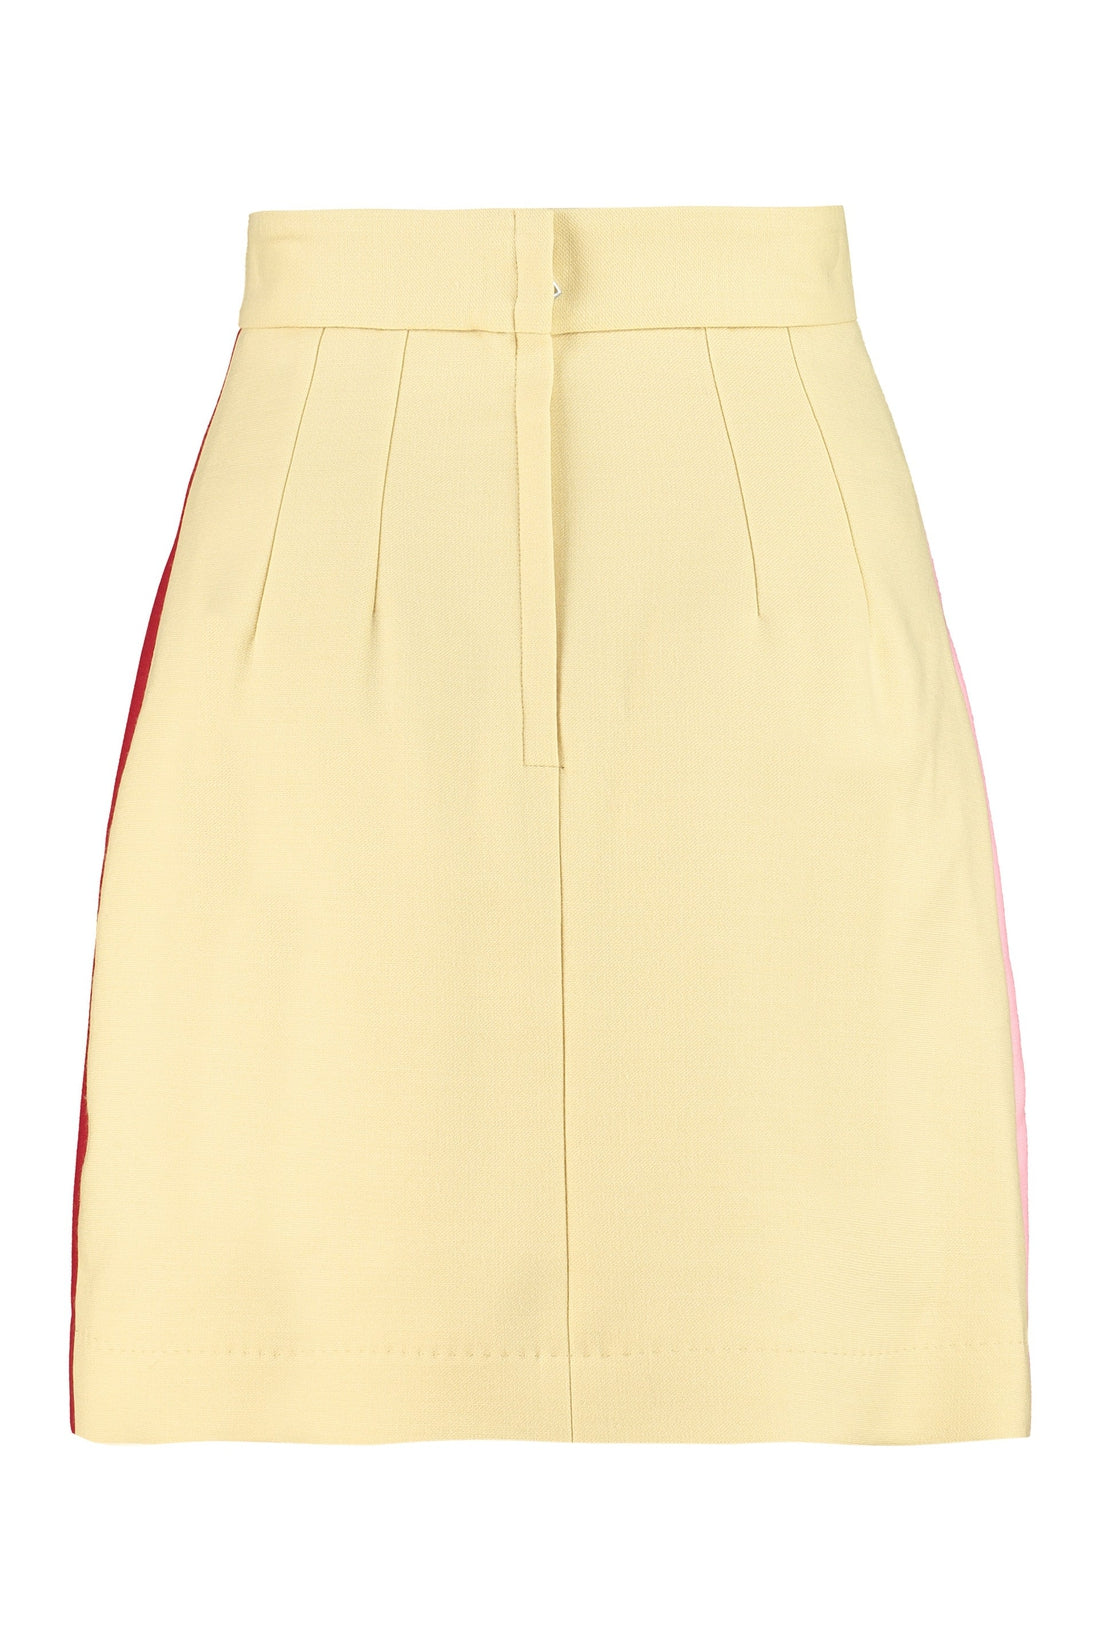 Dolce & Gabbana-OUTLET-SALE-Asymmetric wrap skirt-ARCHIVIST